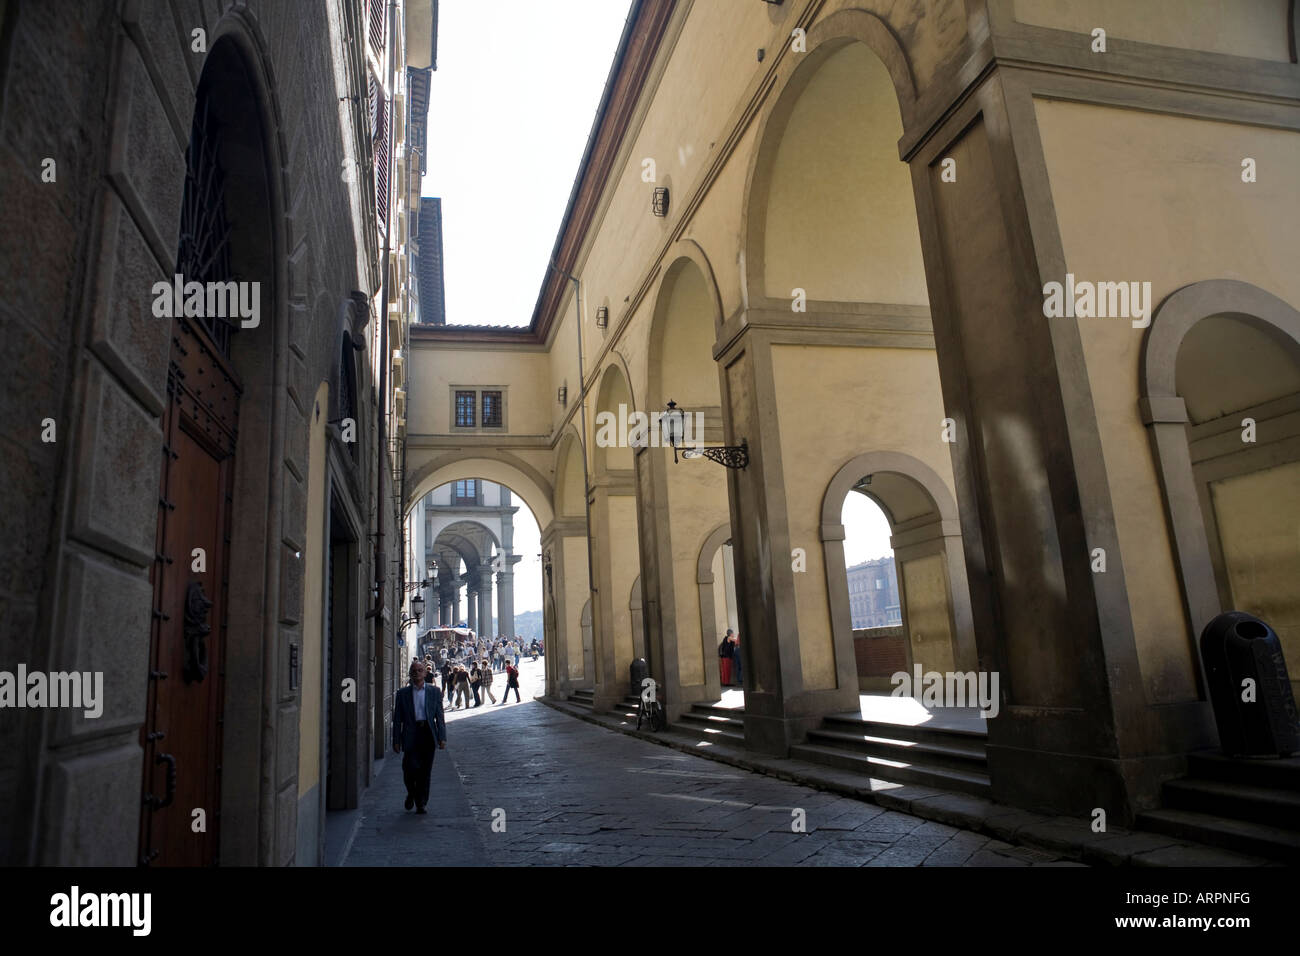 Covered passage between palazzo Vecchio and Ponte Vecchio - Lungarno Archibusieri - Florence - Italy Stock Photo